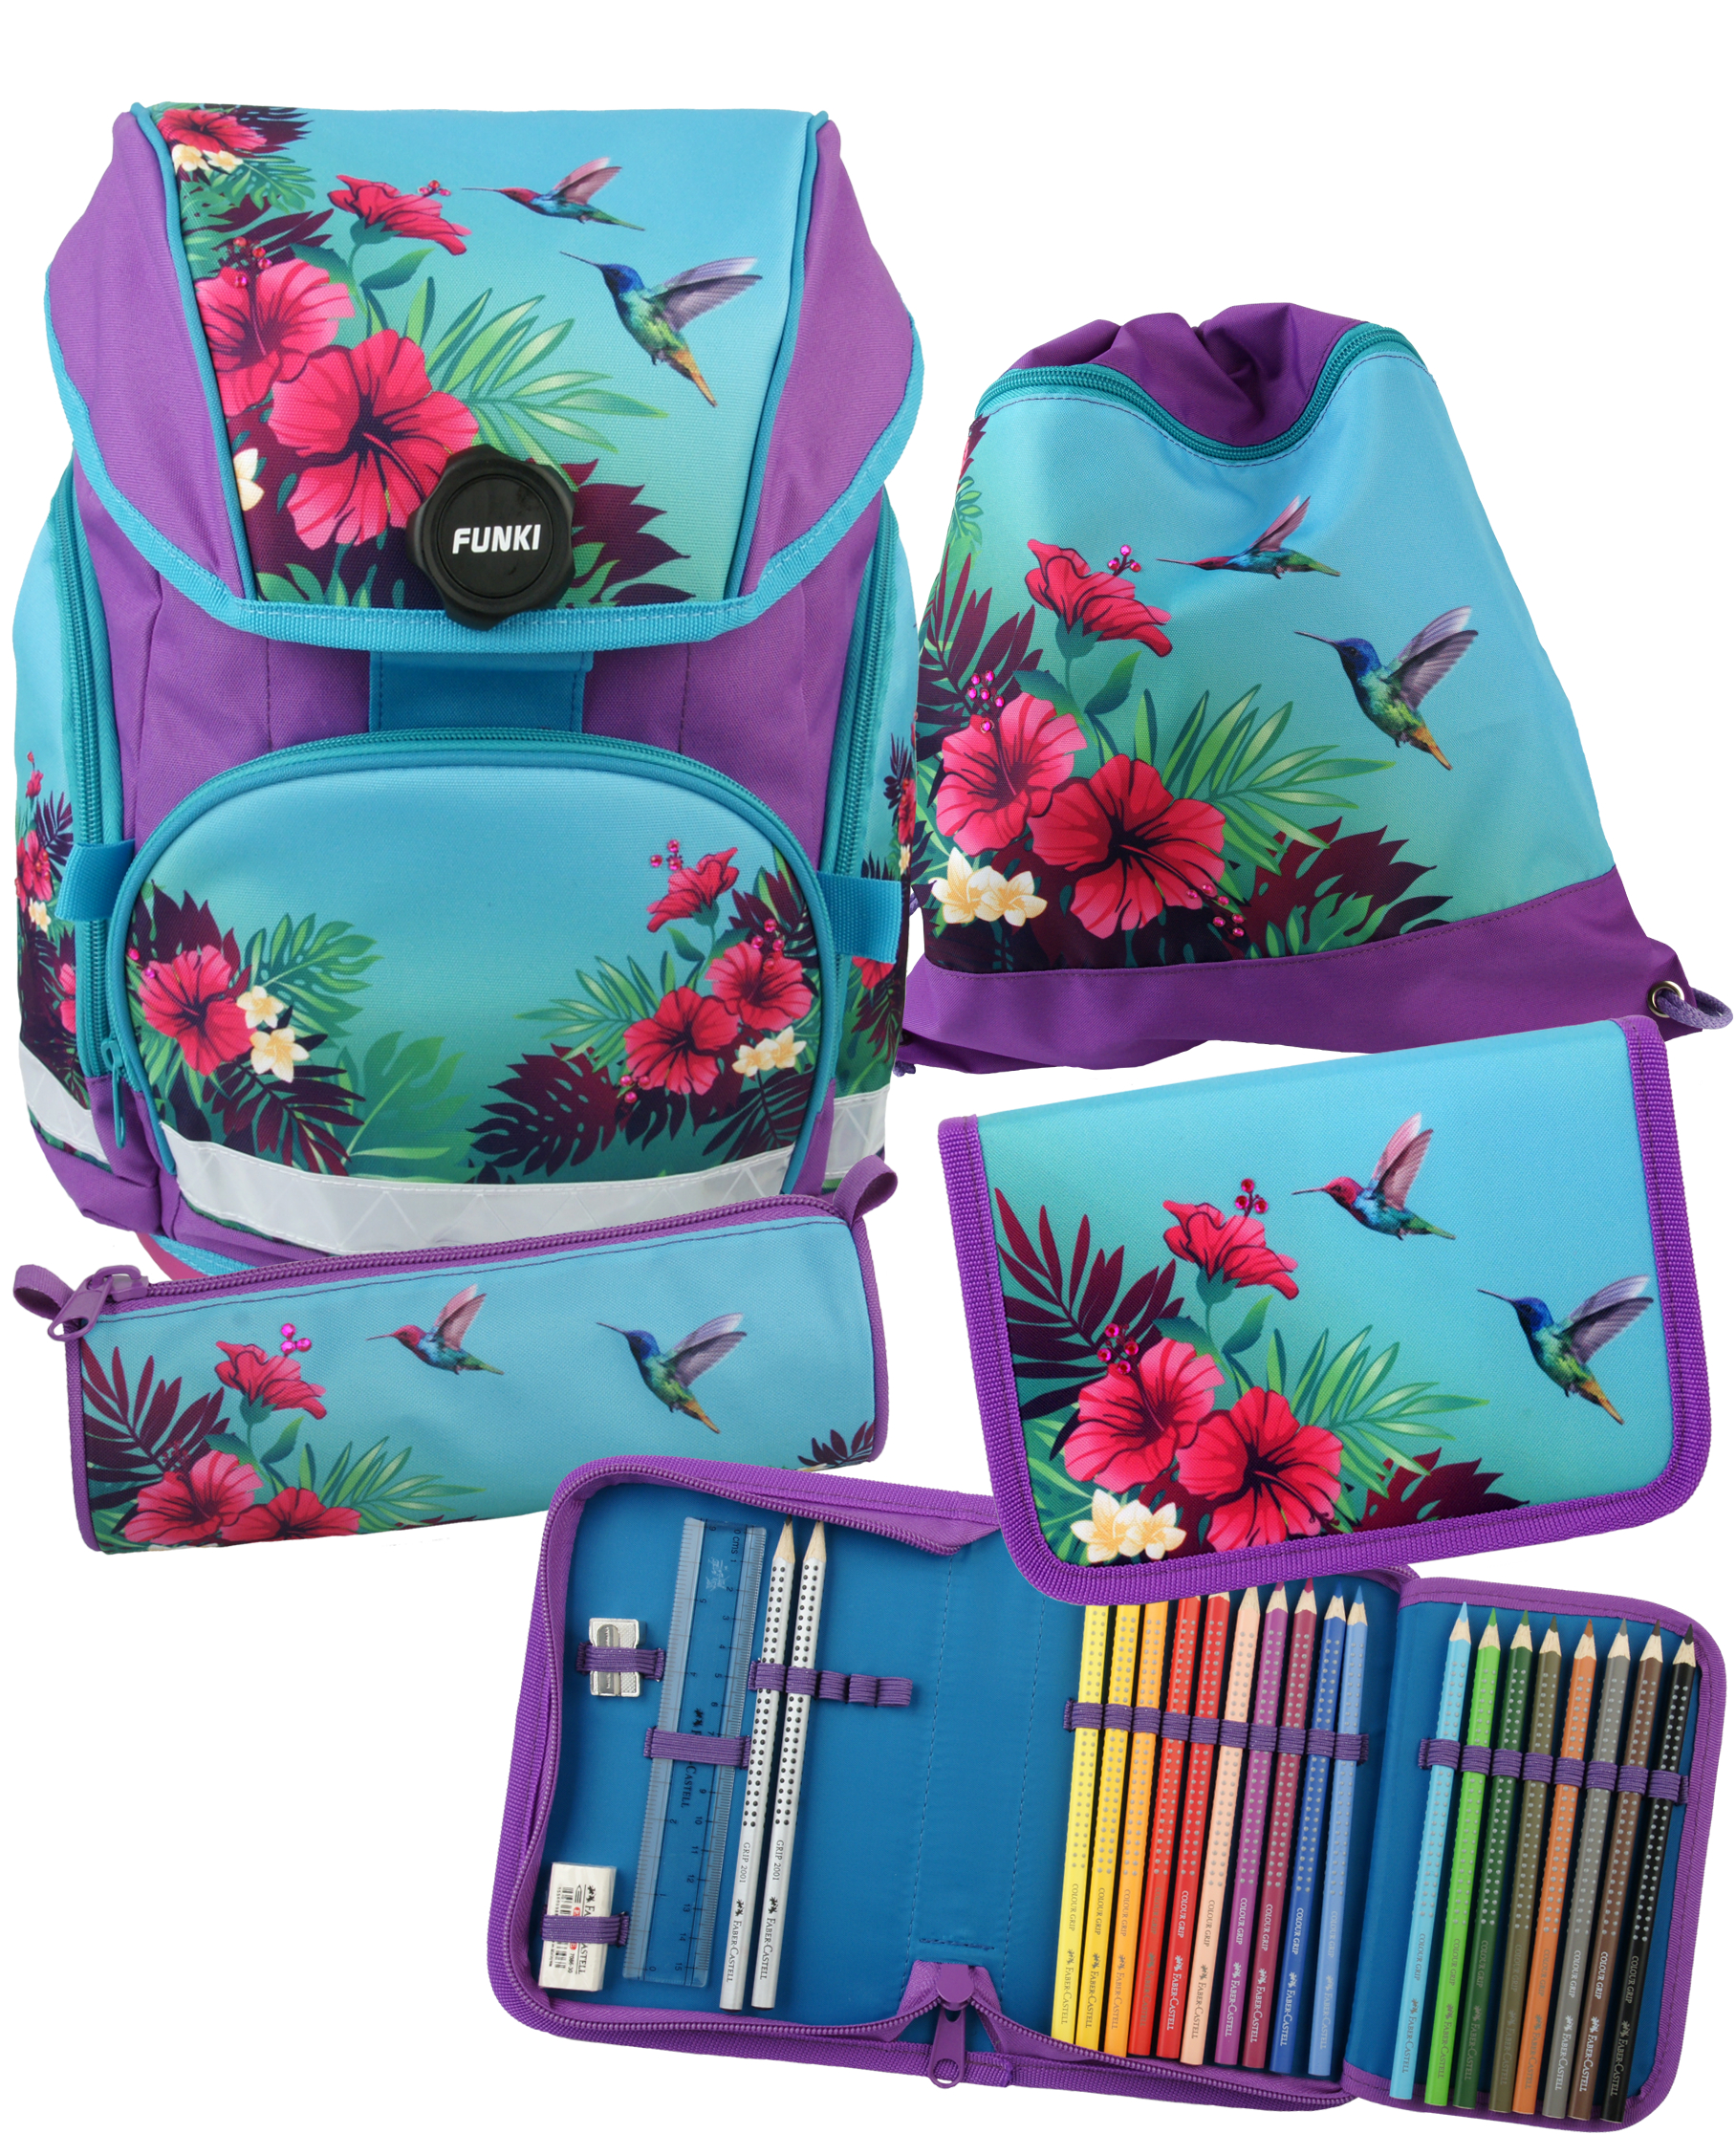 FUNKI Joy-Bag Set Tropical 6011.511 multicolor 4 pcs. multicolor 4 pcs.